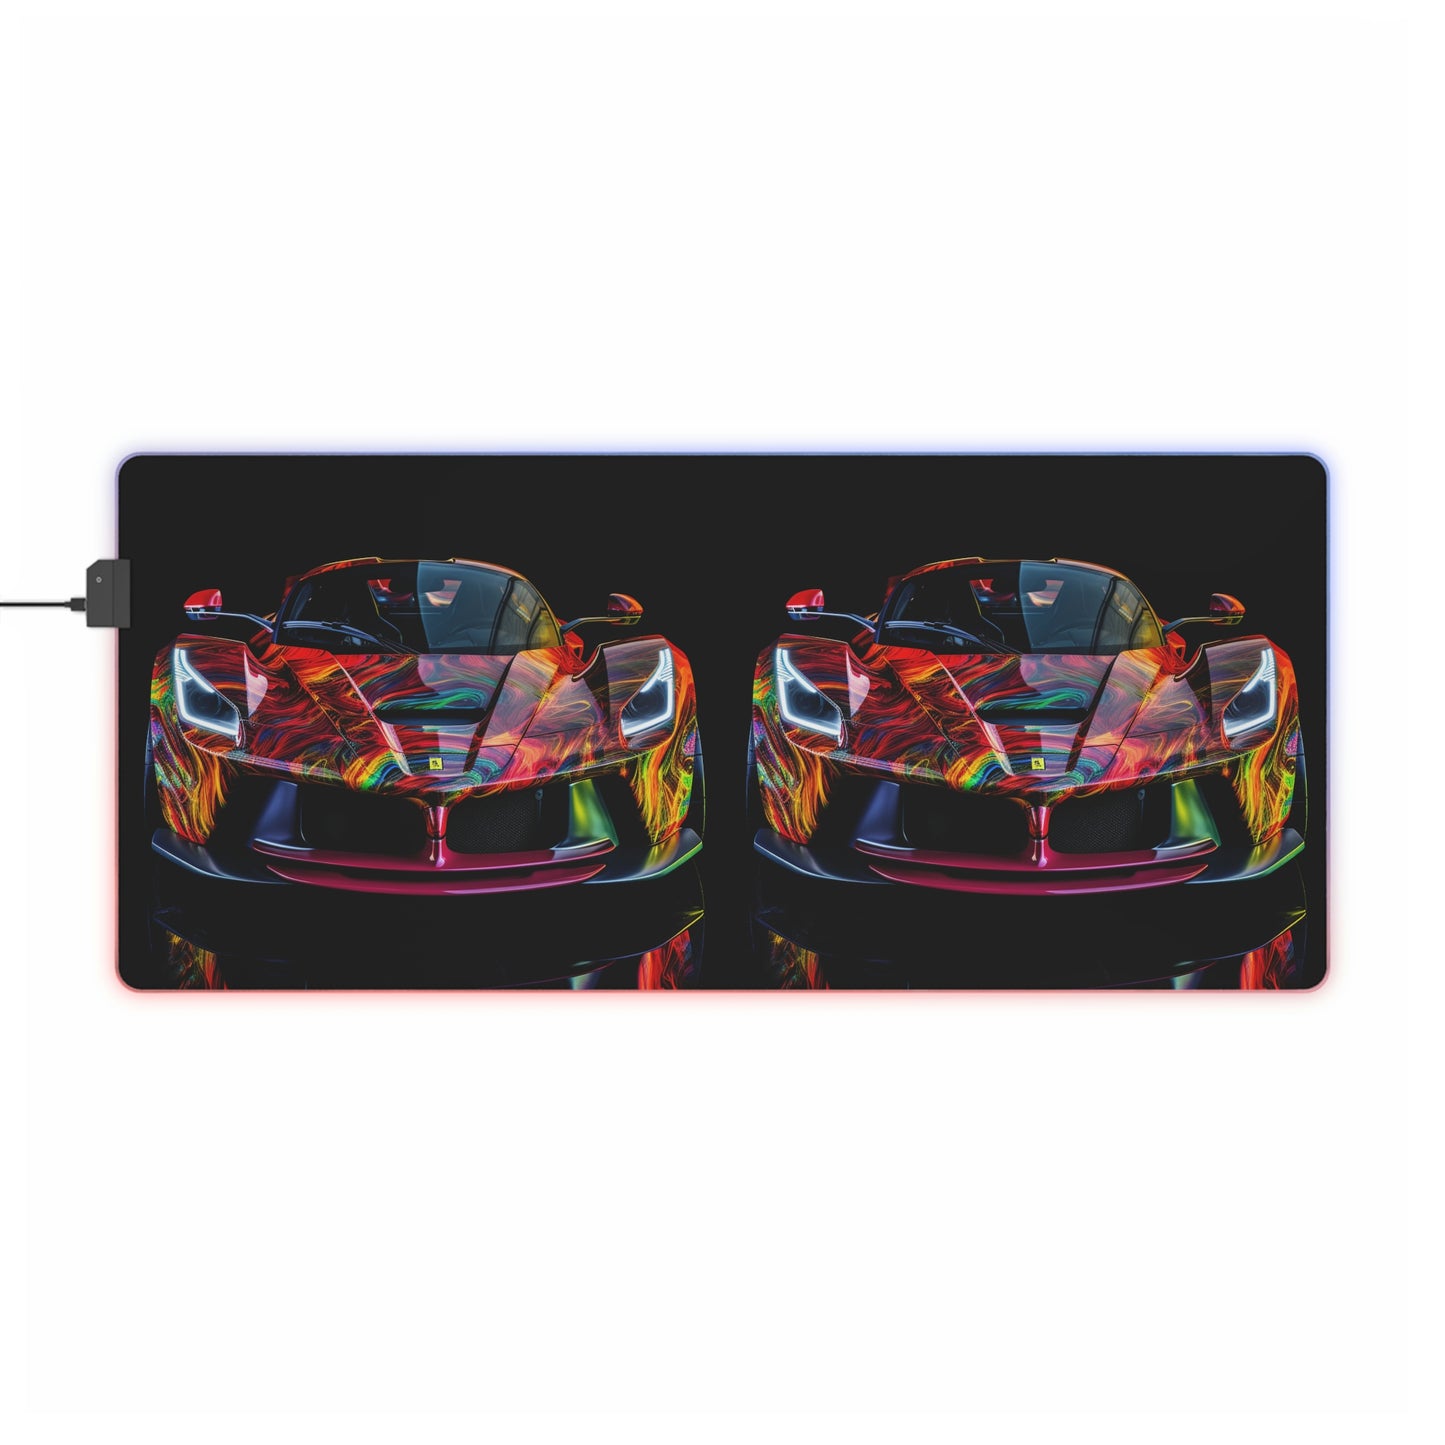 LED Gaming Mouse Pad Ferrari Neon 3